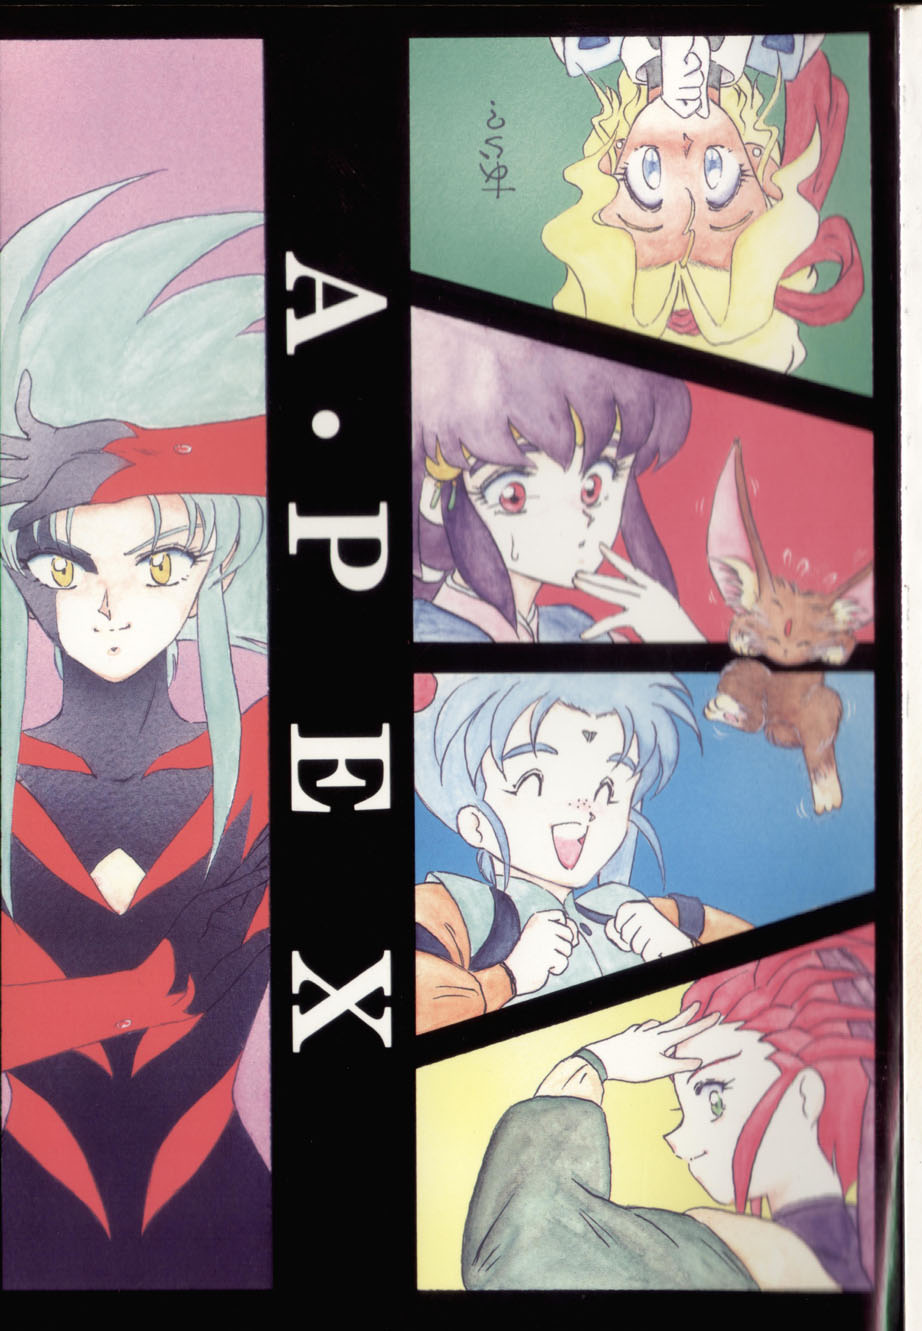 A PEX (Brave Express Might Gaine, Tenchi Muyo) 